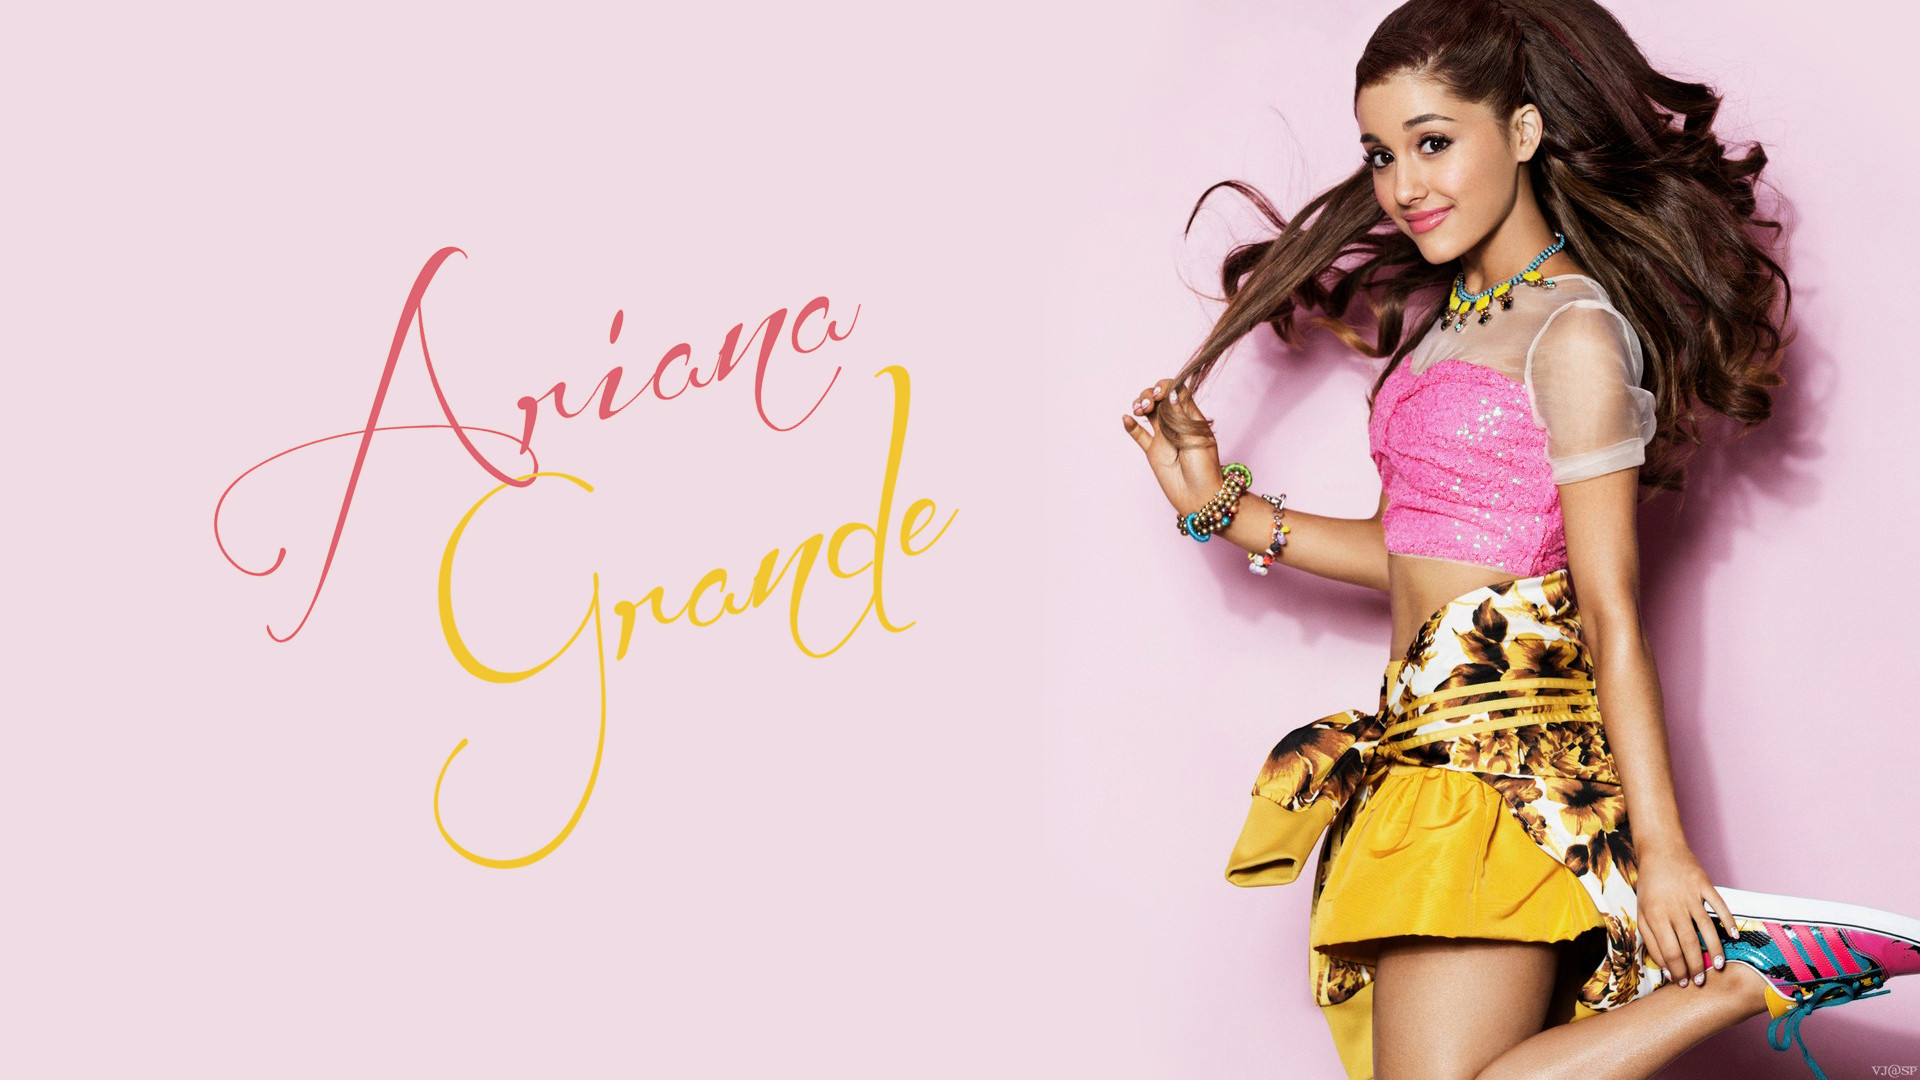 ariana grande wallpaper  Ariana grande background, Ariana grande outfits, Ariana  grande lockscreen